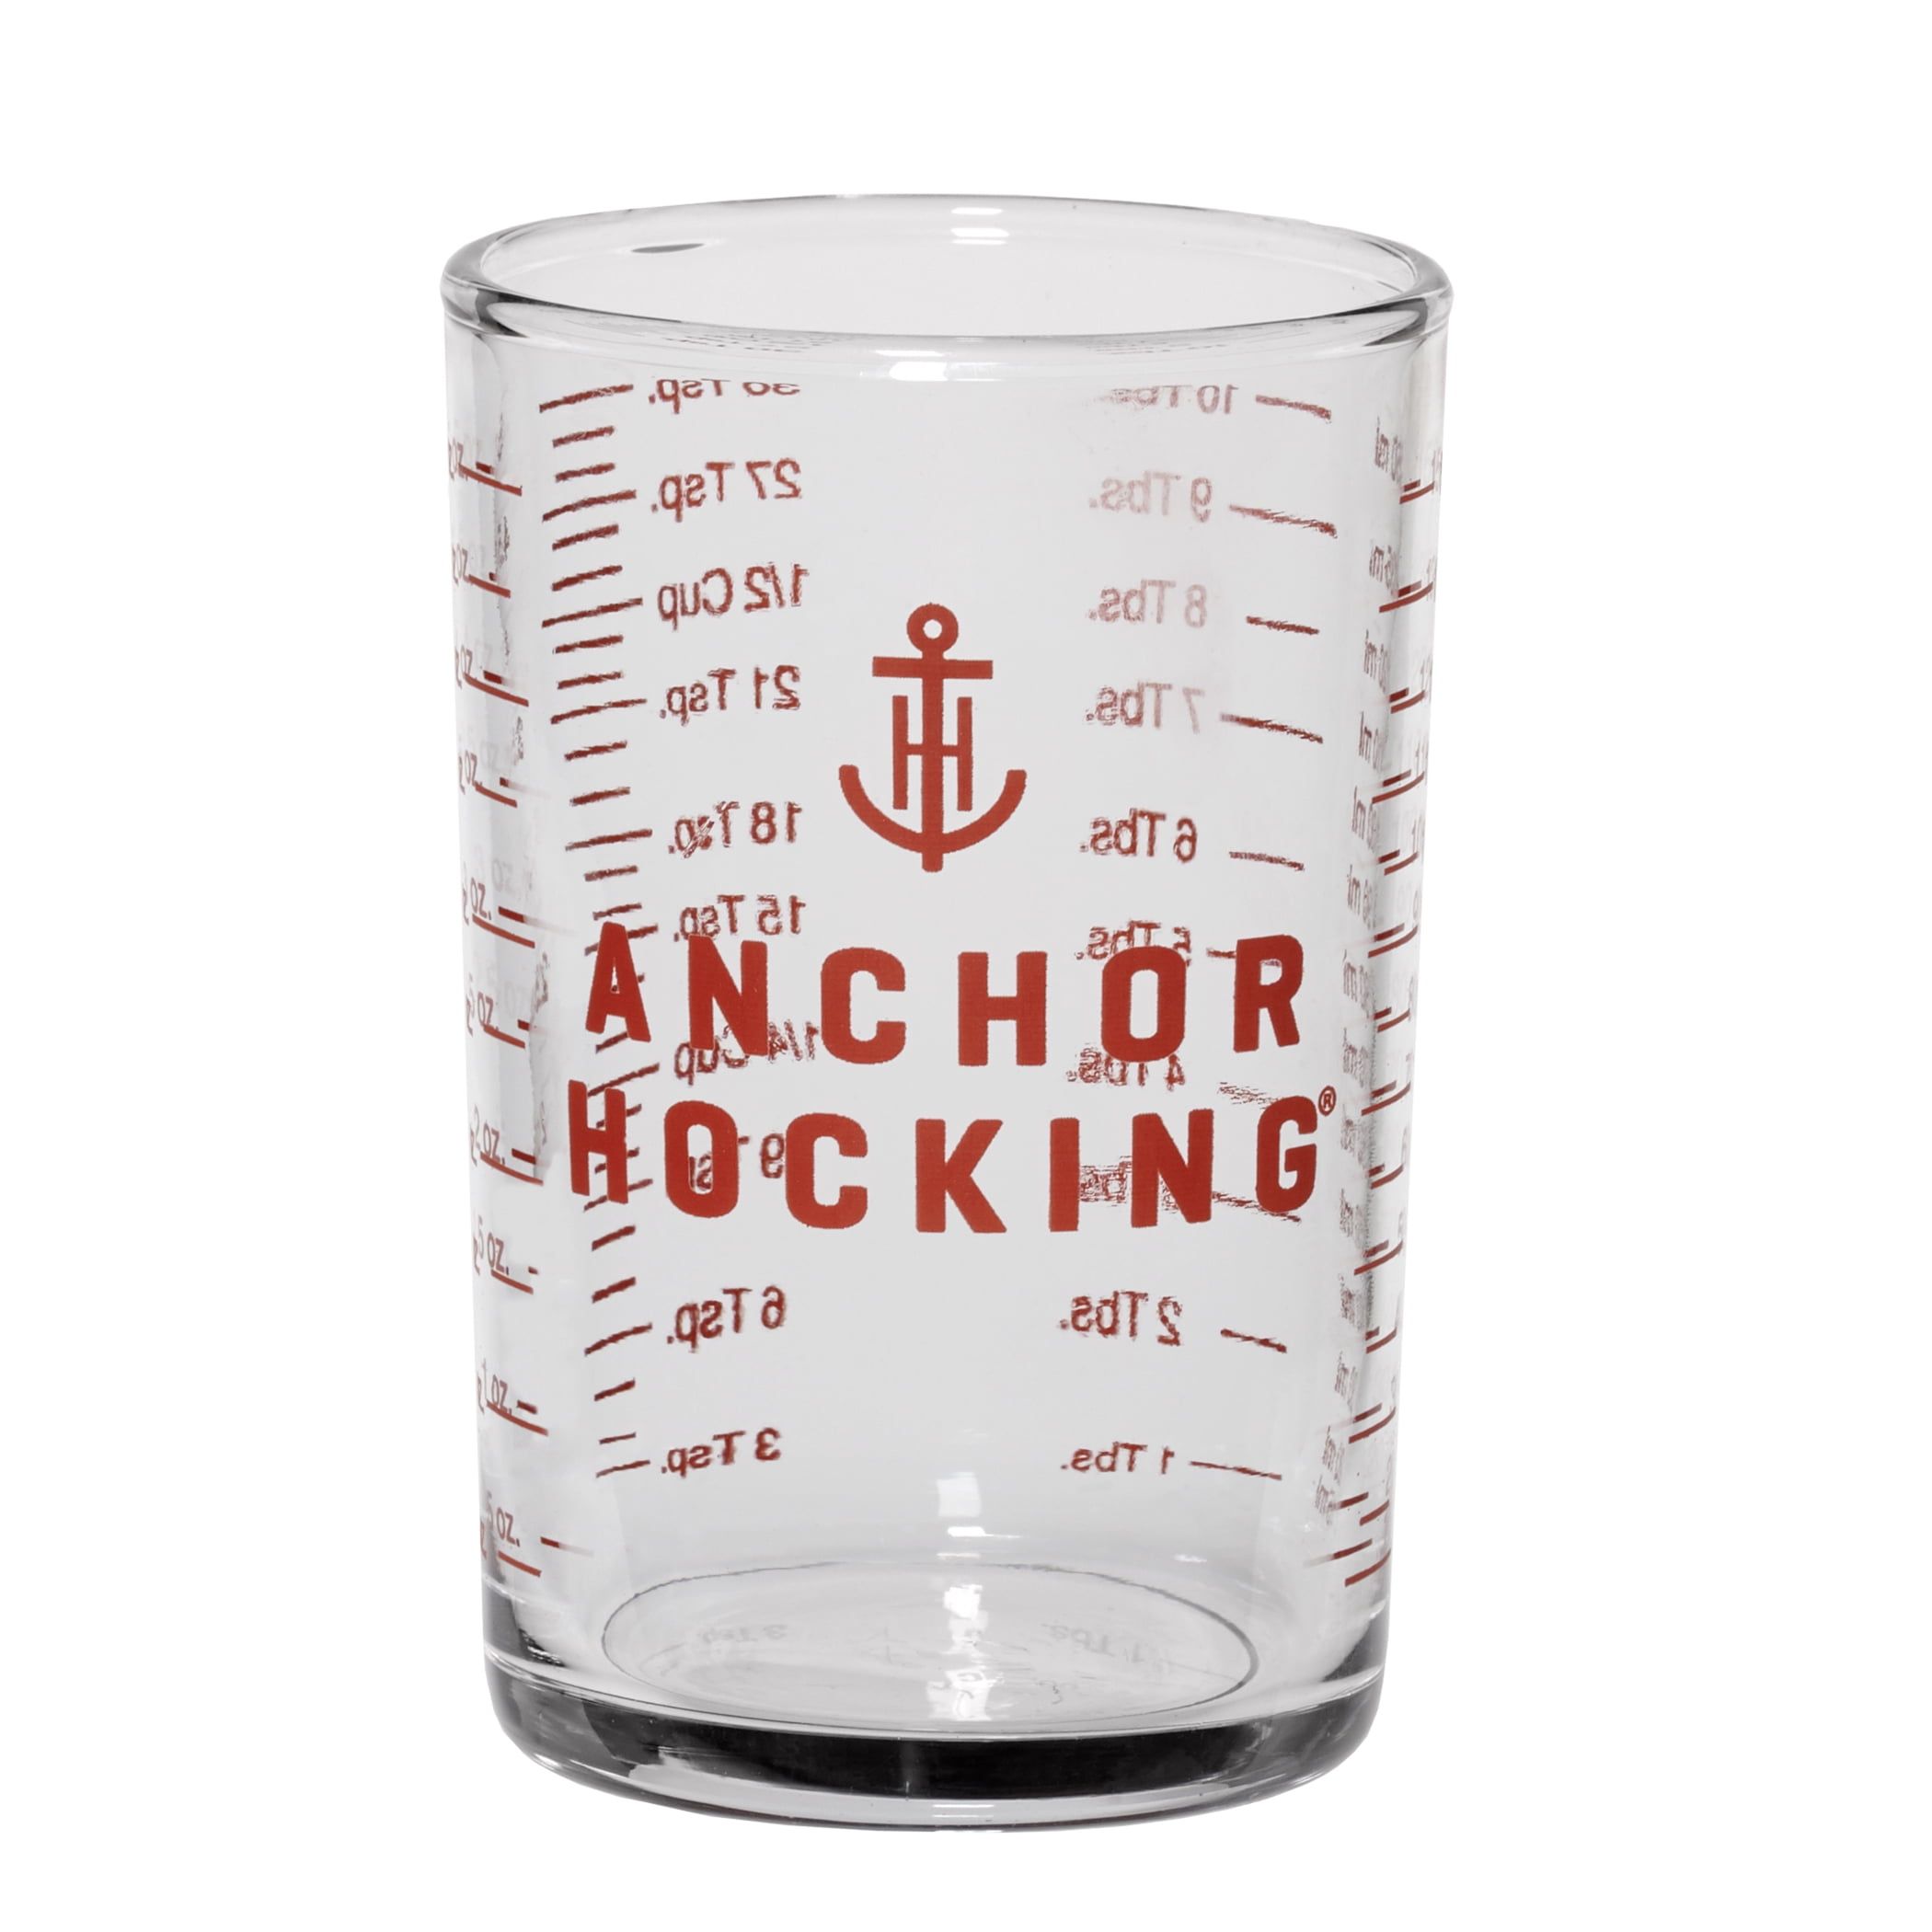 Anchor Hocking 16 oz. Measuring Cup